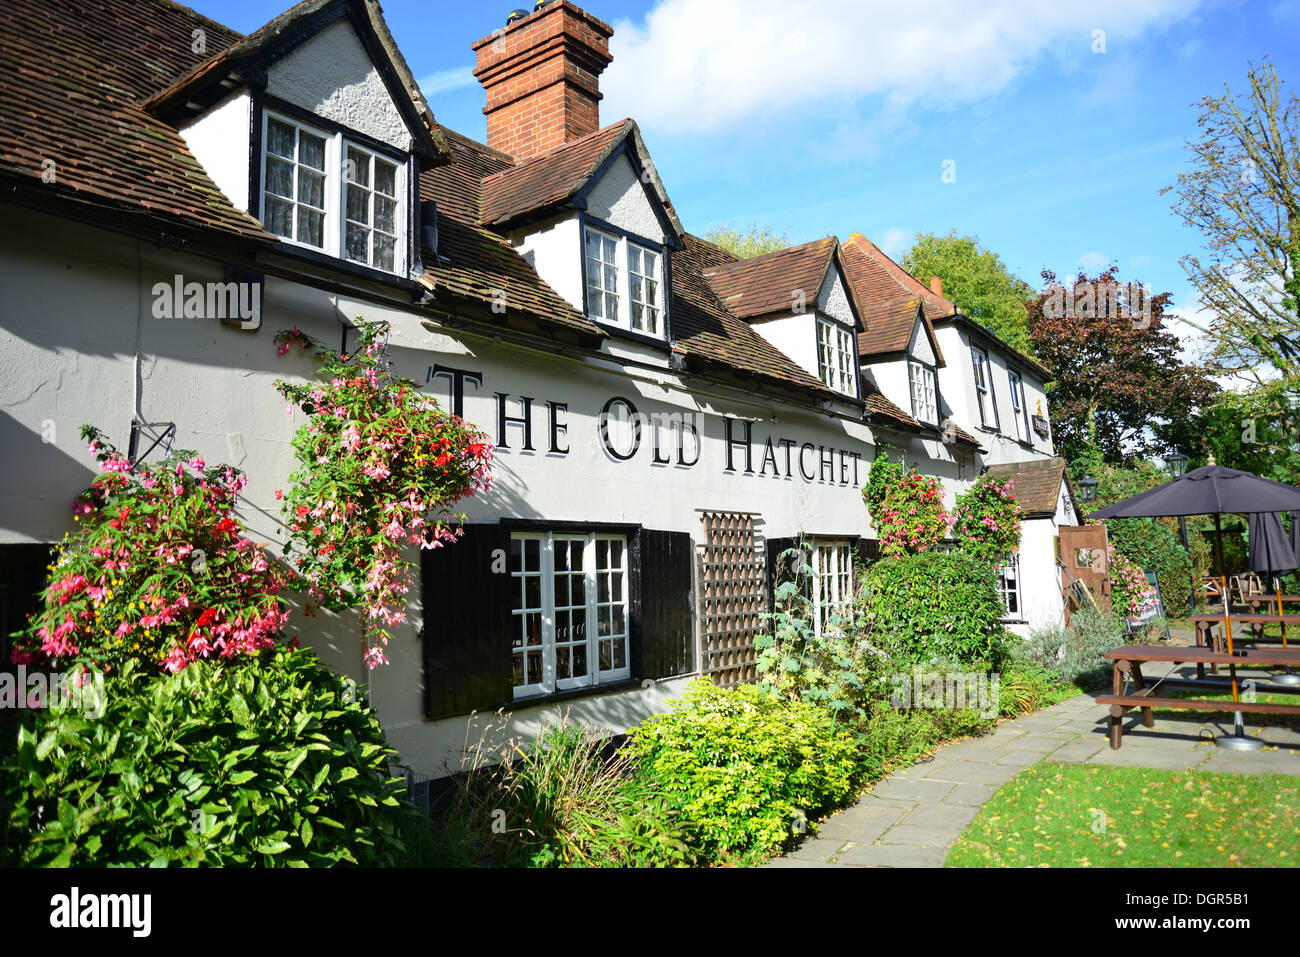 16th century 'The Old Hatchet' pub, Hatchet Lane, Cranbourne, Berkshire, England, United Kingdom Stock Photo